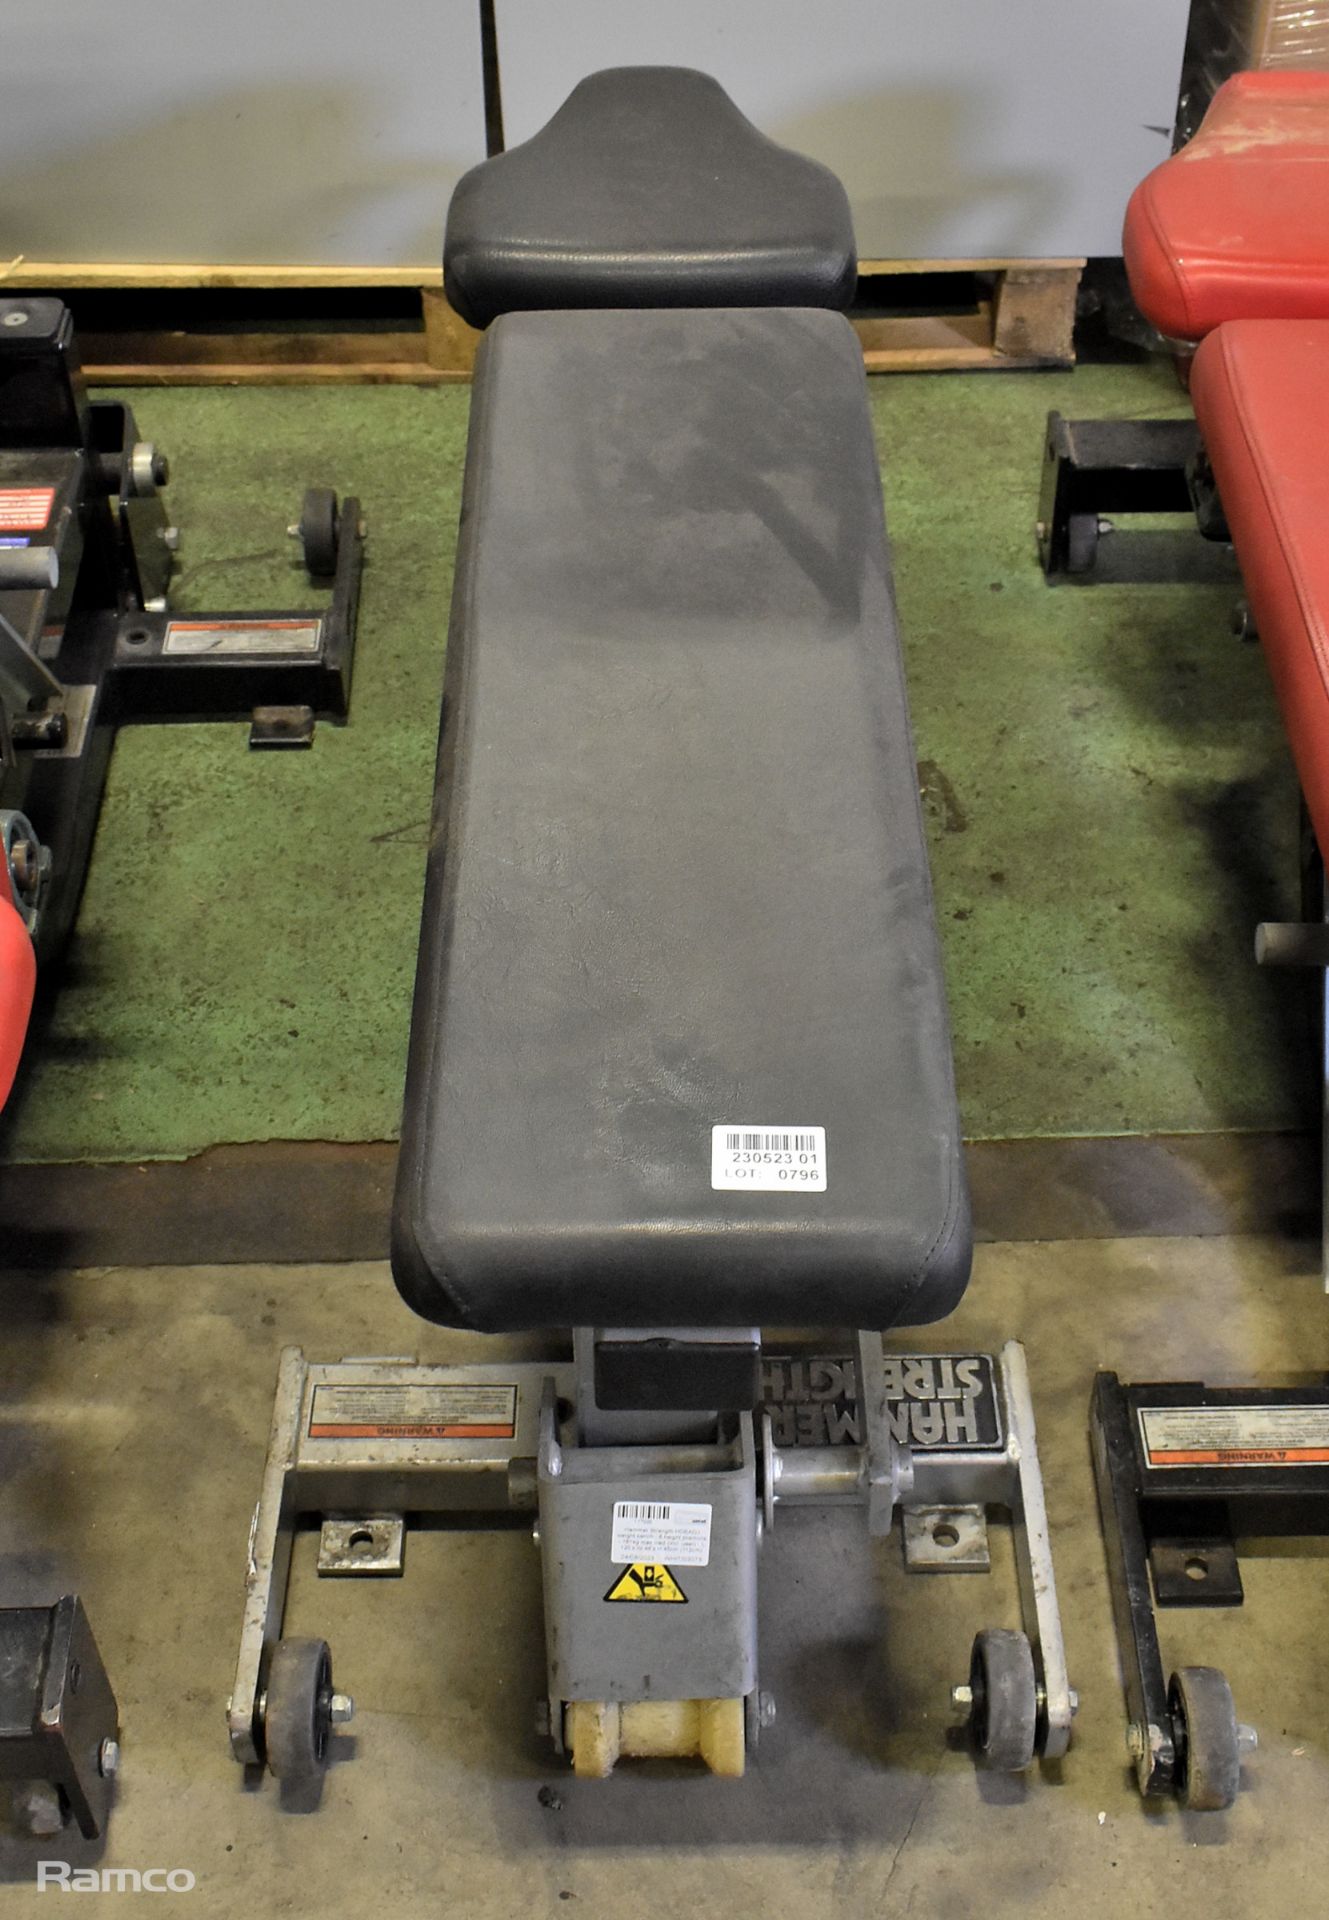 Hammer Strength HDEADJ weight bench - 6 height positions - 181 kg max load (incl. user)